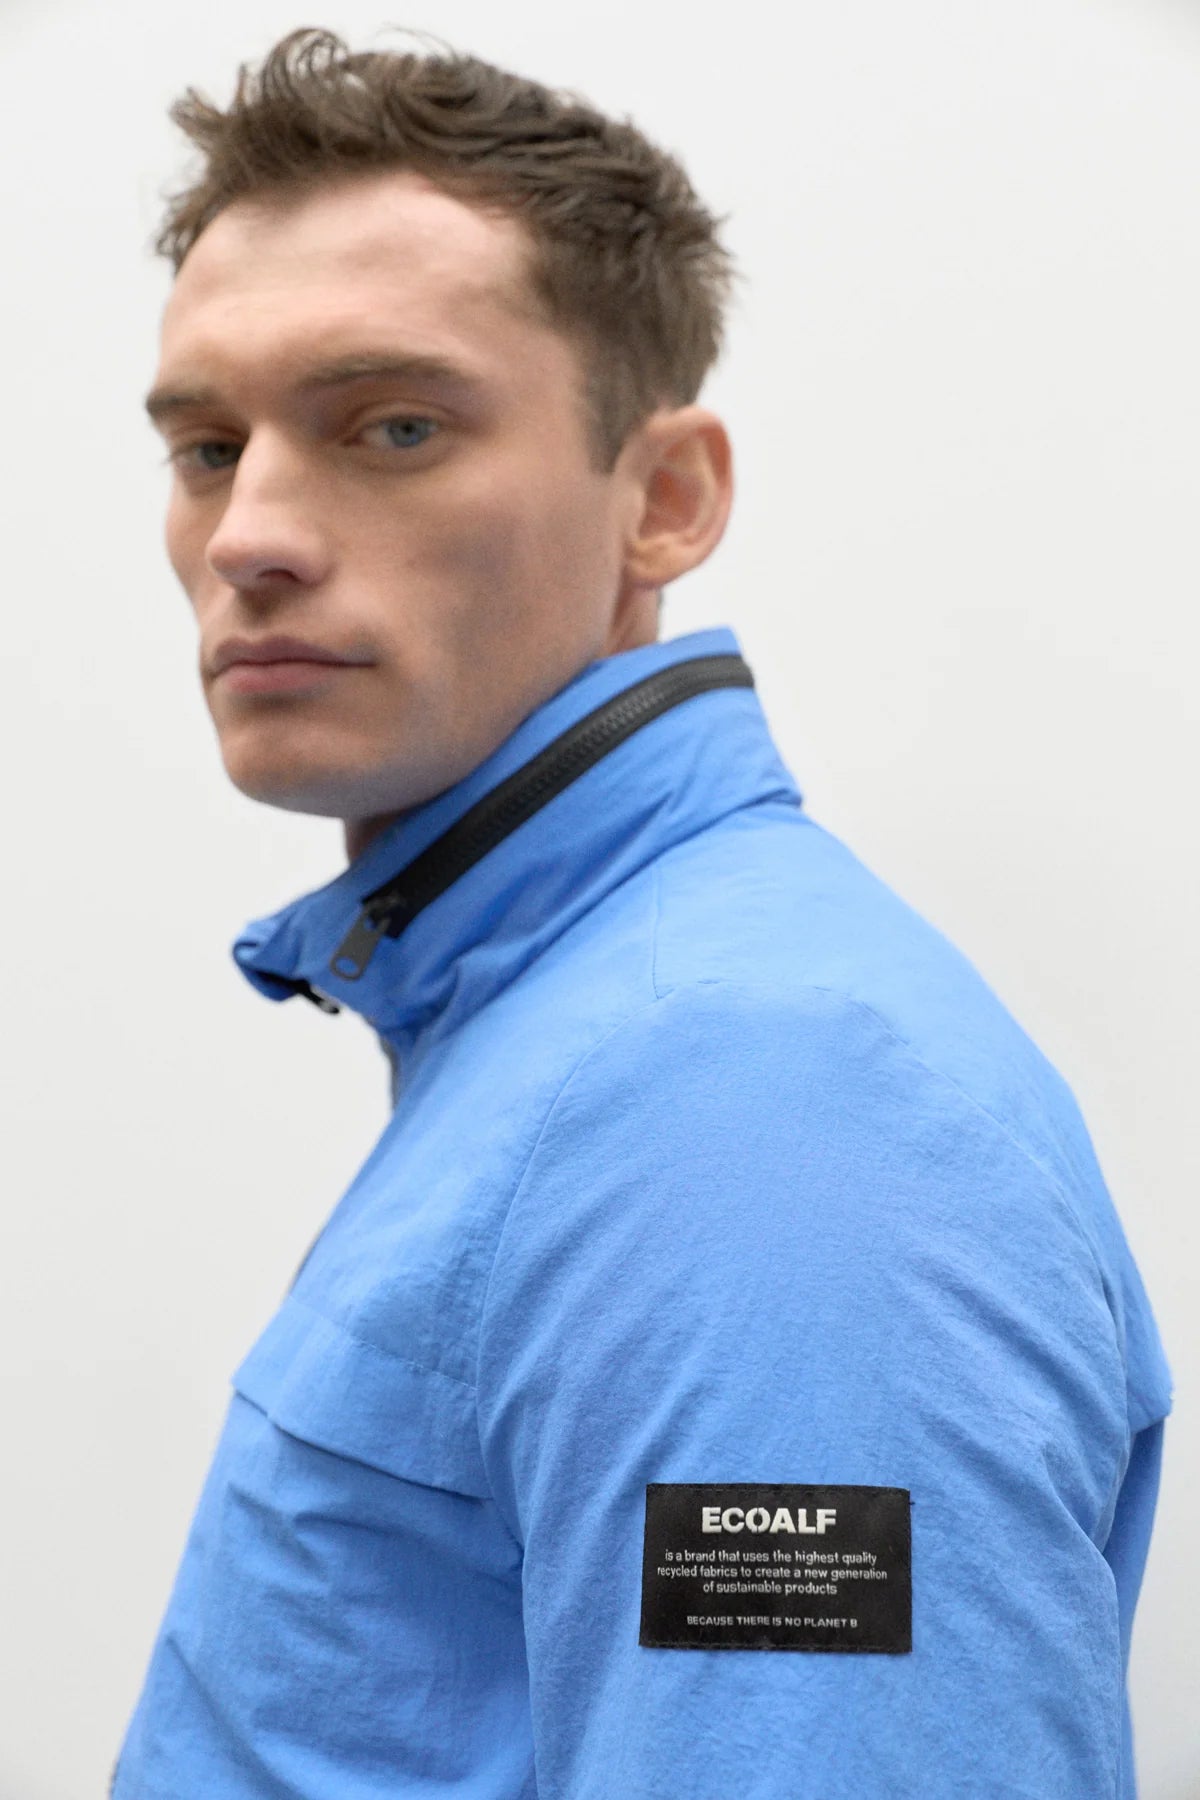 Ecoalf - M's Beniaalf Jacket - 100% Recycled nylon - Weekendbee - sustainable sportswear